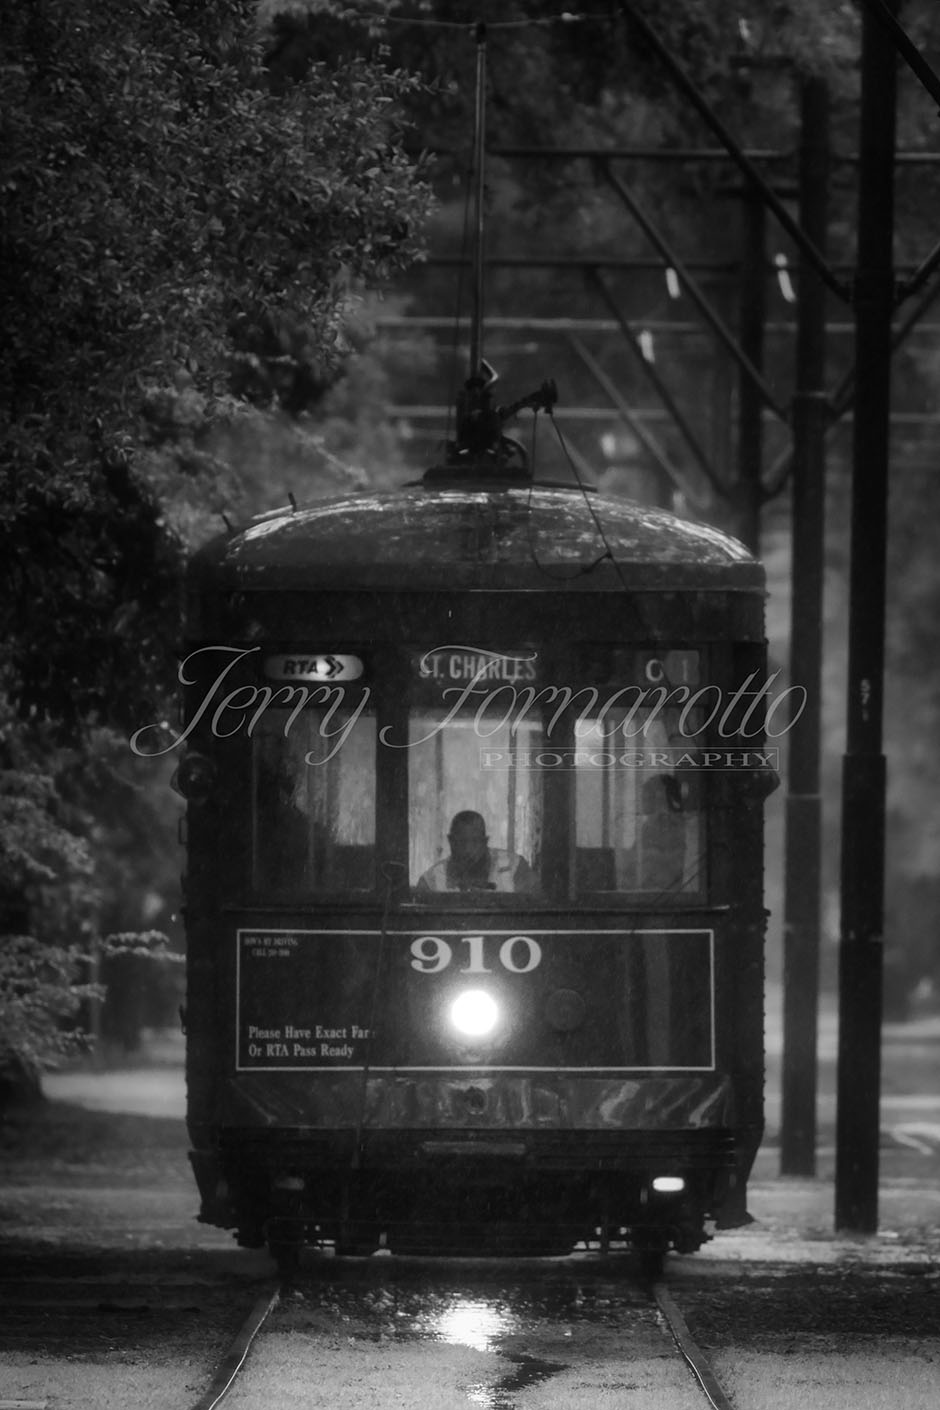 St. Charles Streetcar #910